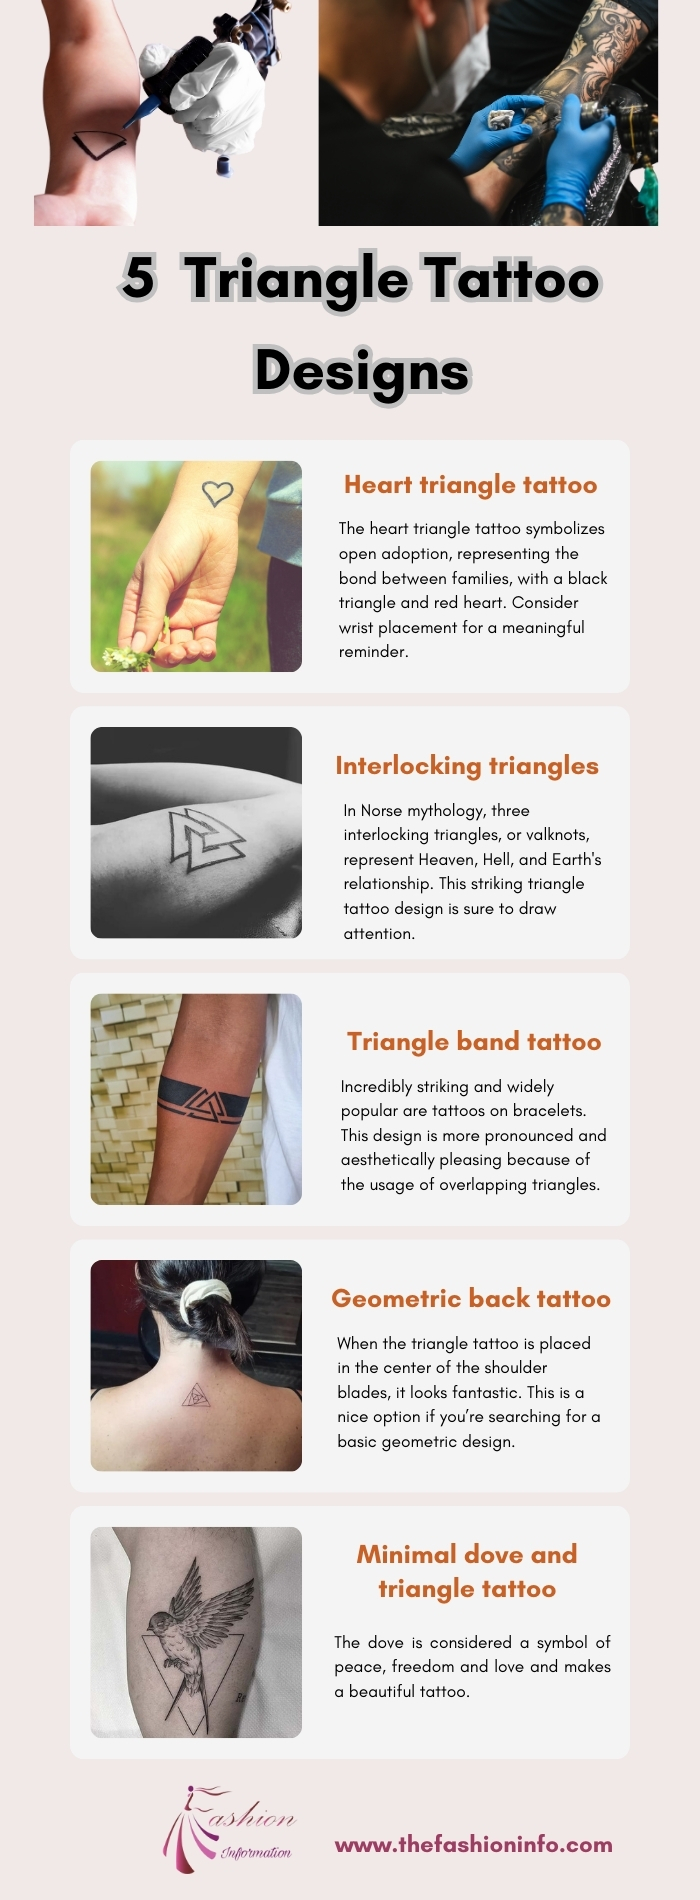 5 Triangle Tattoo Designs